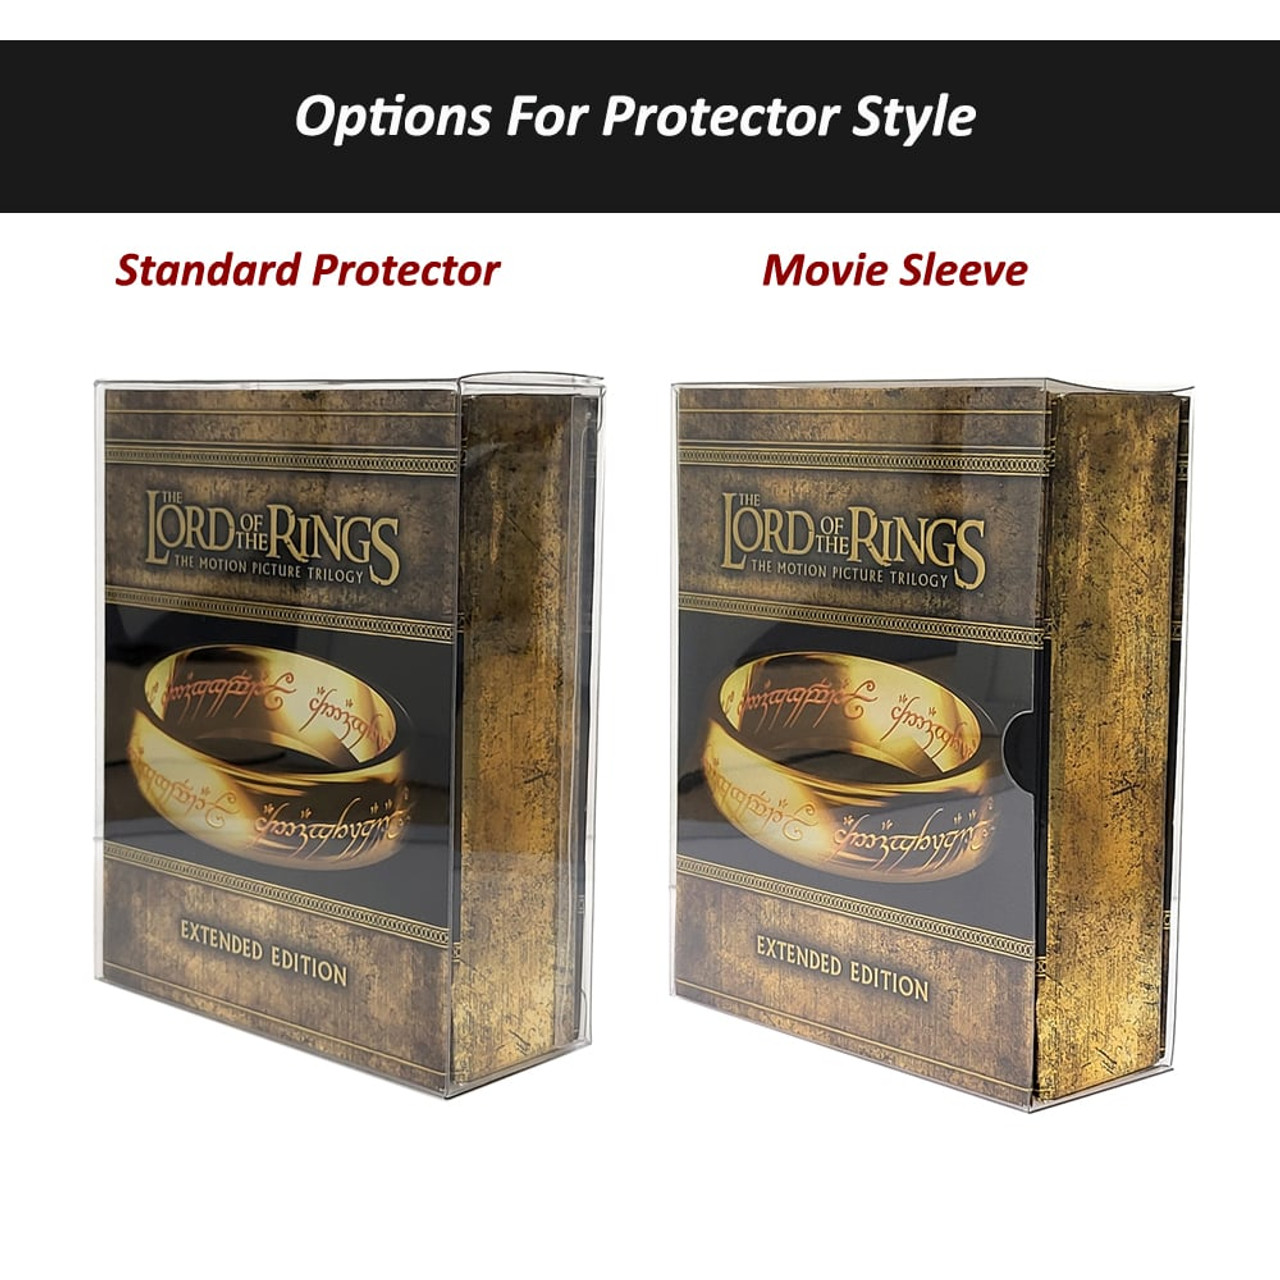 Protector For Reservoir Dogs Lenticular Hard Box Viavision